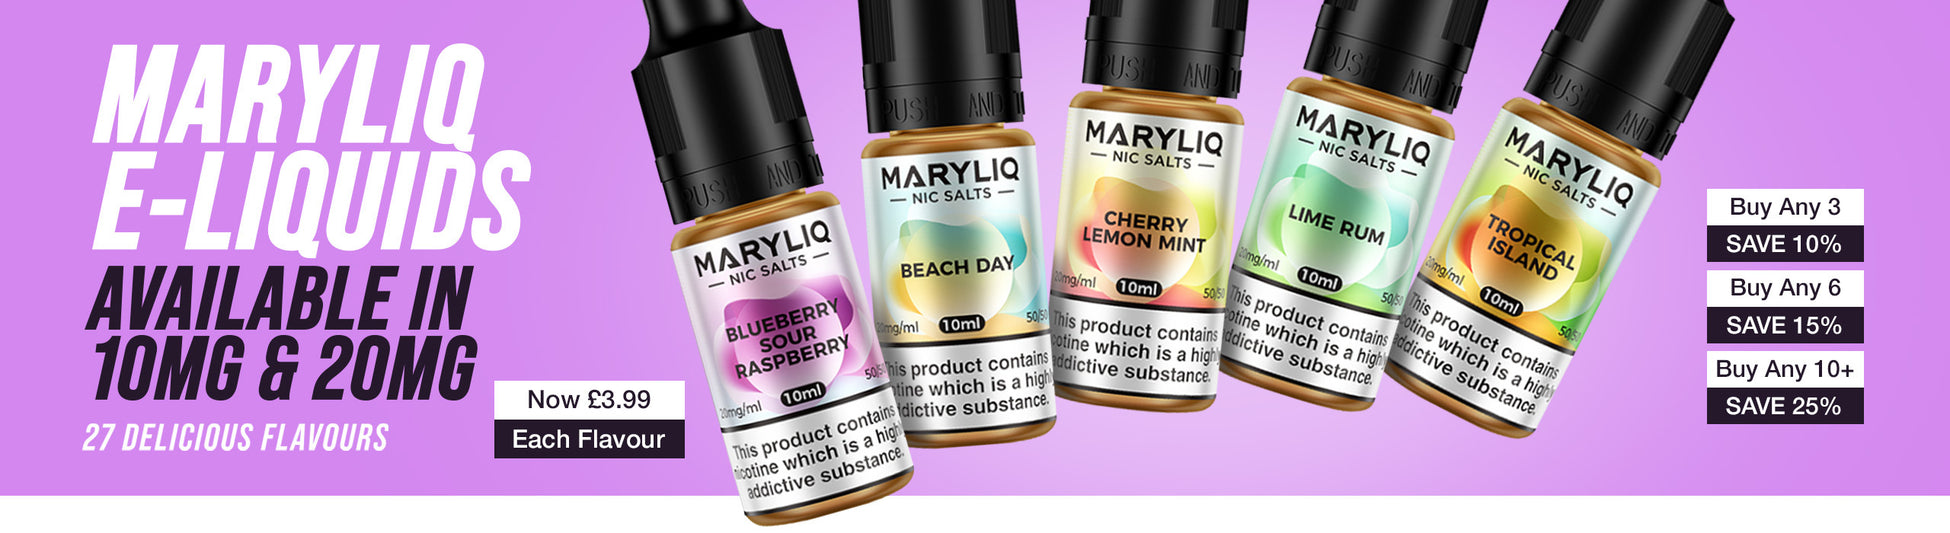 MaryLiq E-Liquid